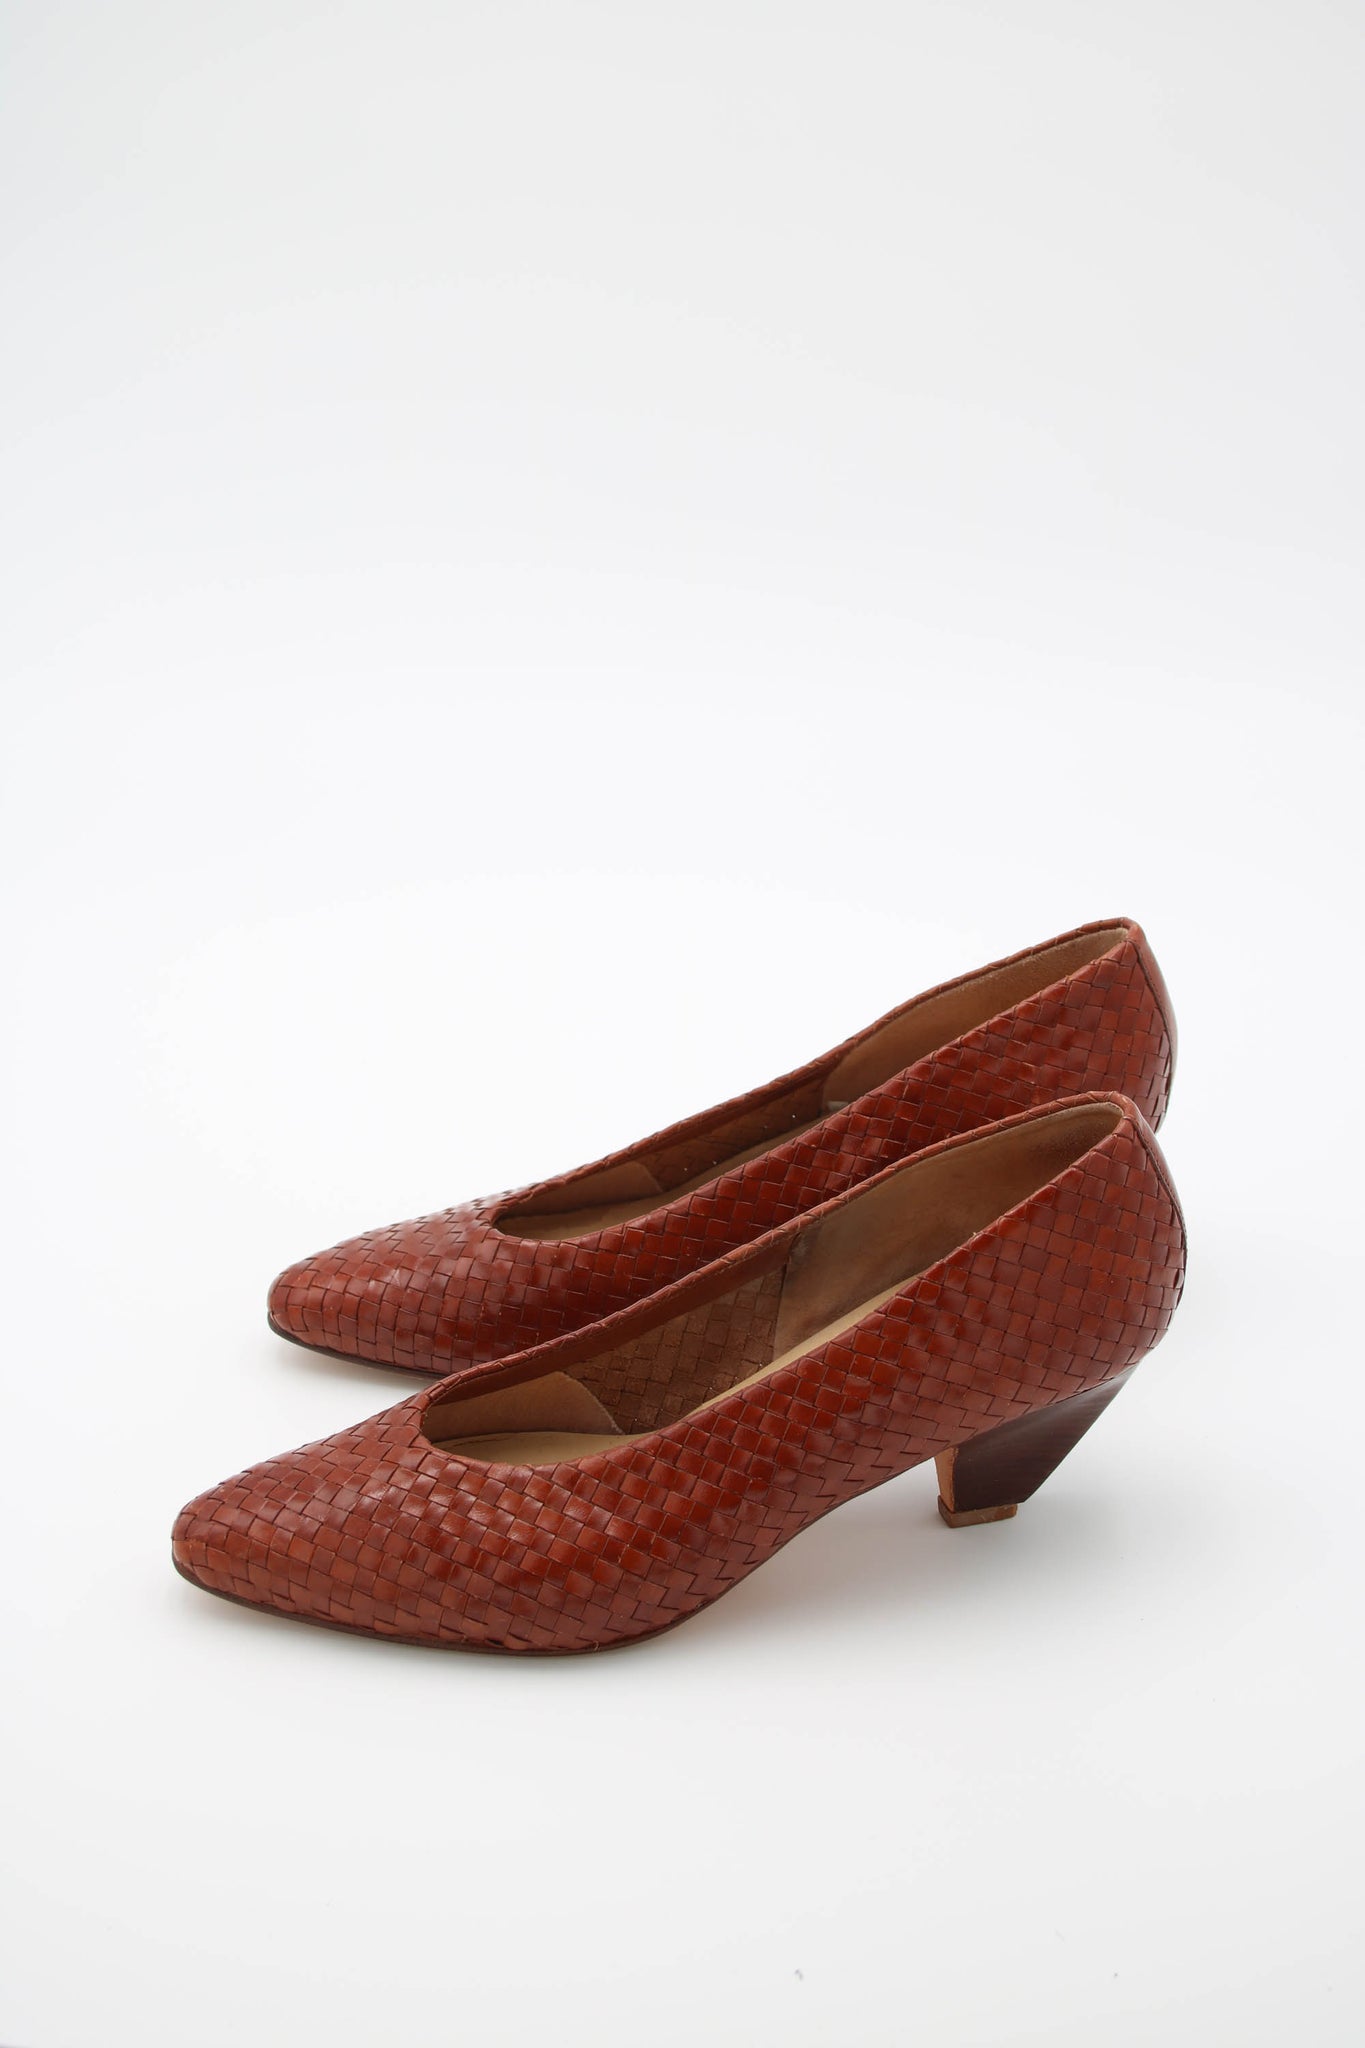 Bandolino brown leather kitten heel pumps | 8M